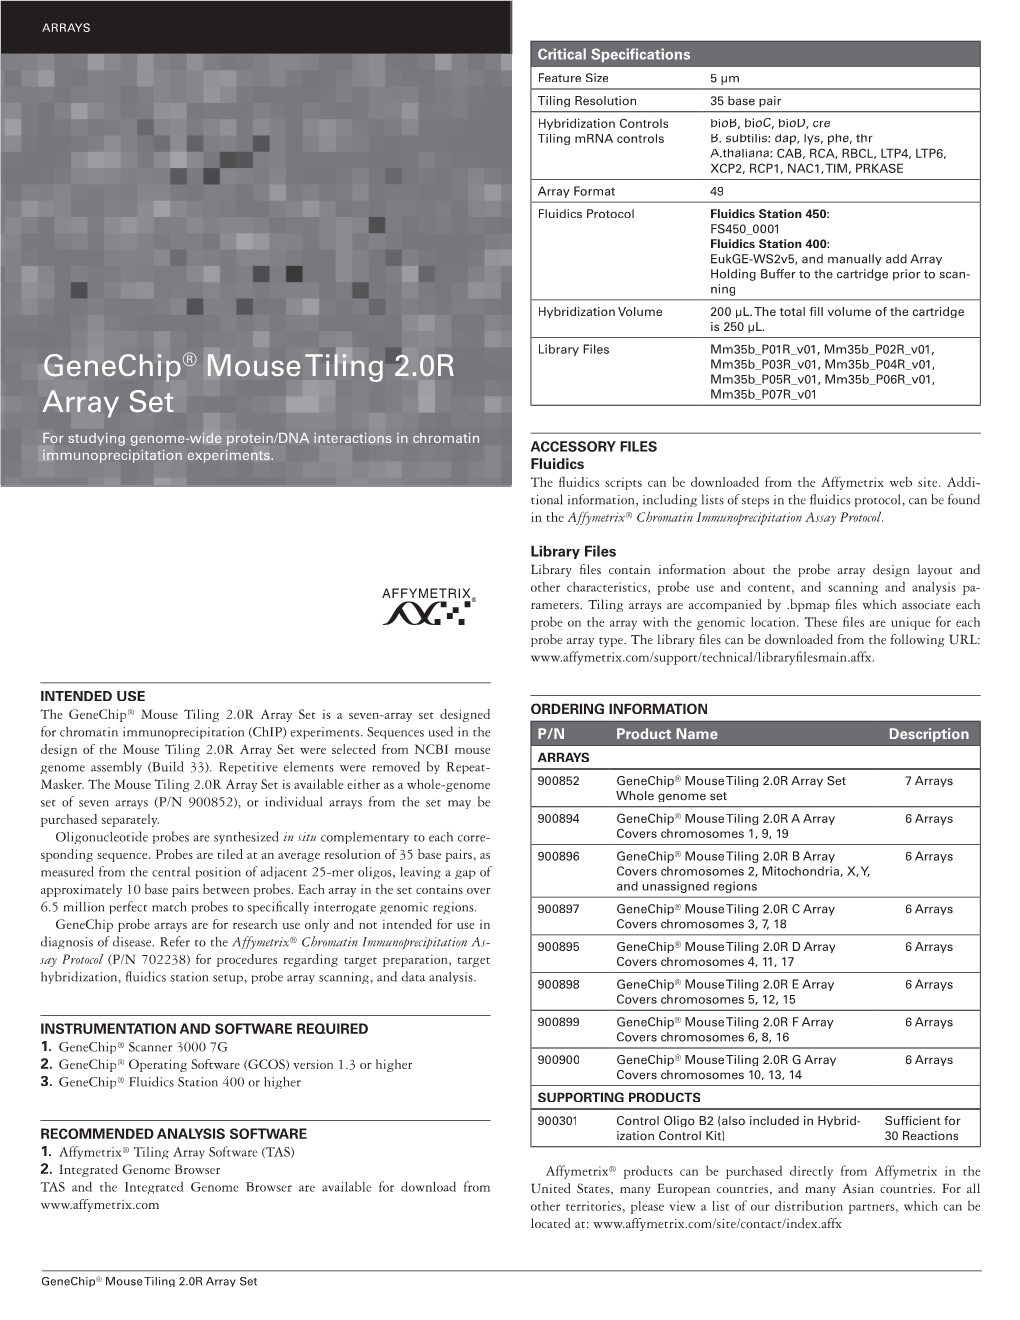 Genechip® Mouse Tiling 2.0R Array Set Is a Seven-Array Set Designed ORDERING INFORMATION for Chromatin Immunoprecipitation (Chip) Experiments